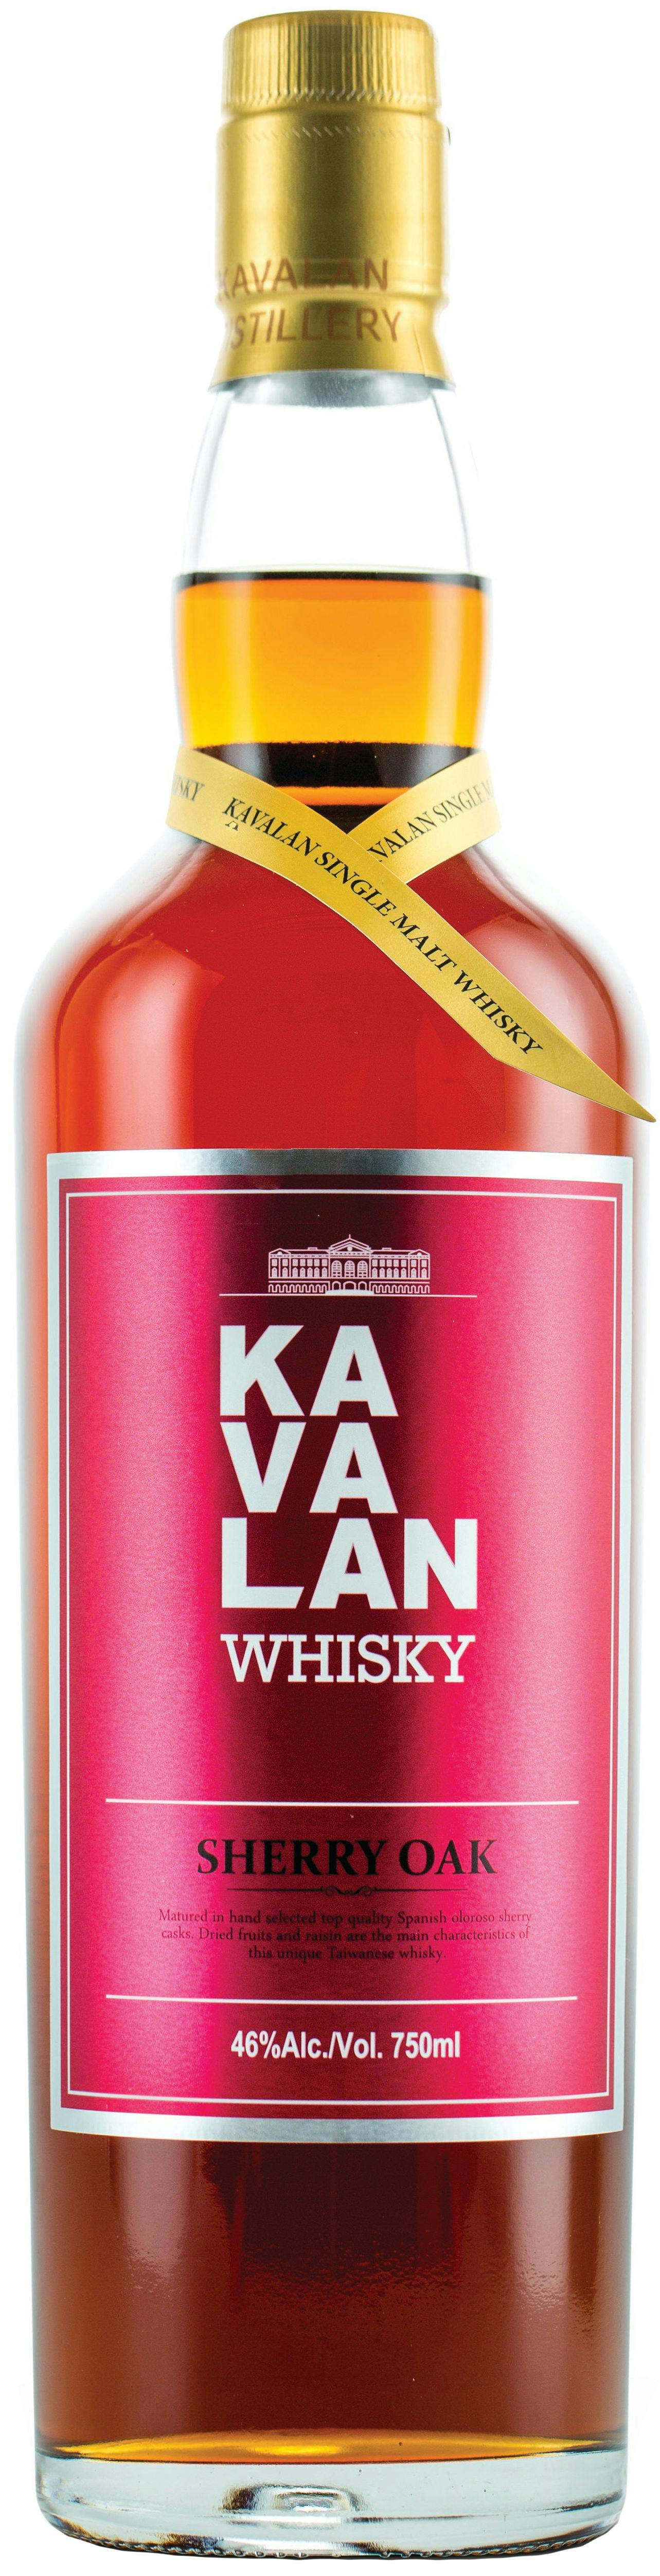 Kavalan Sherry Oak Single Malt Taiwan Whisky 46% Alc 750ml $145 - Uncle  Fossil Wine&Spirits